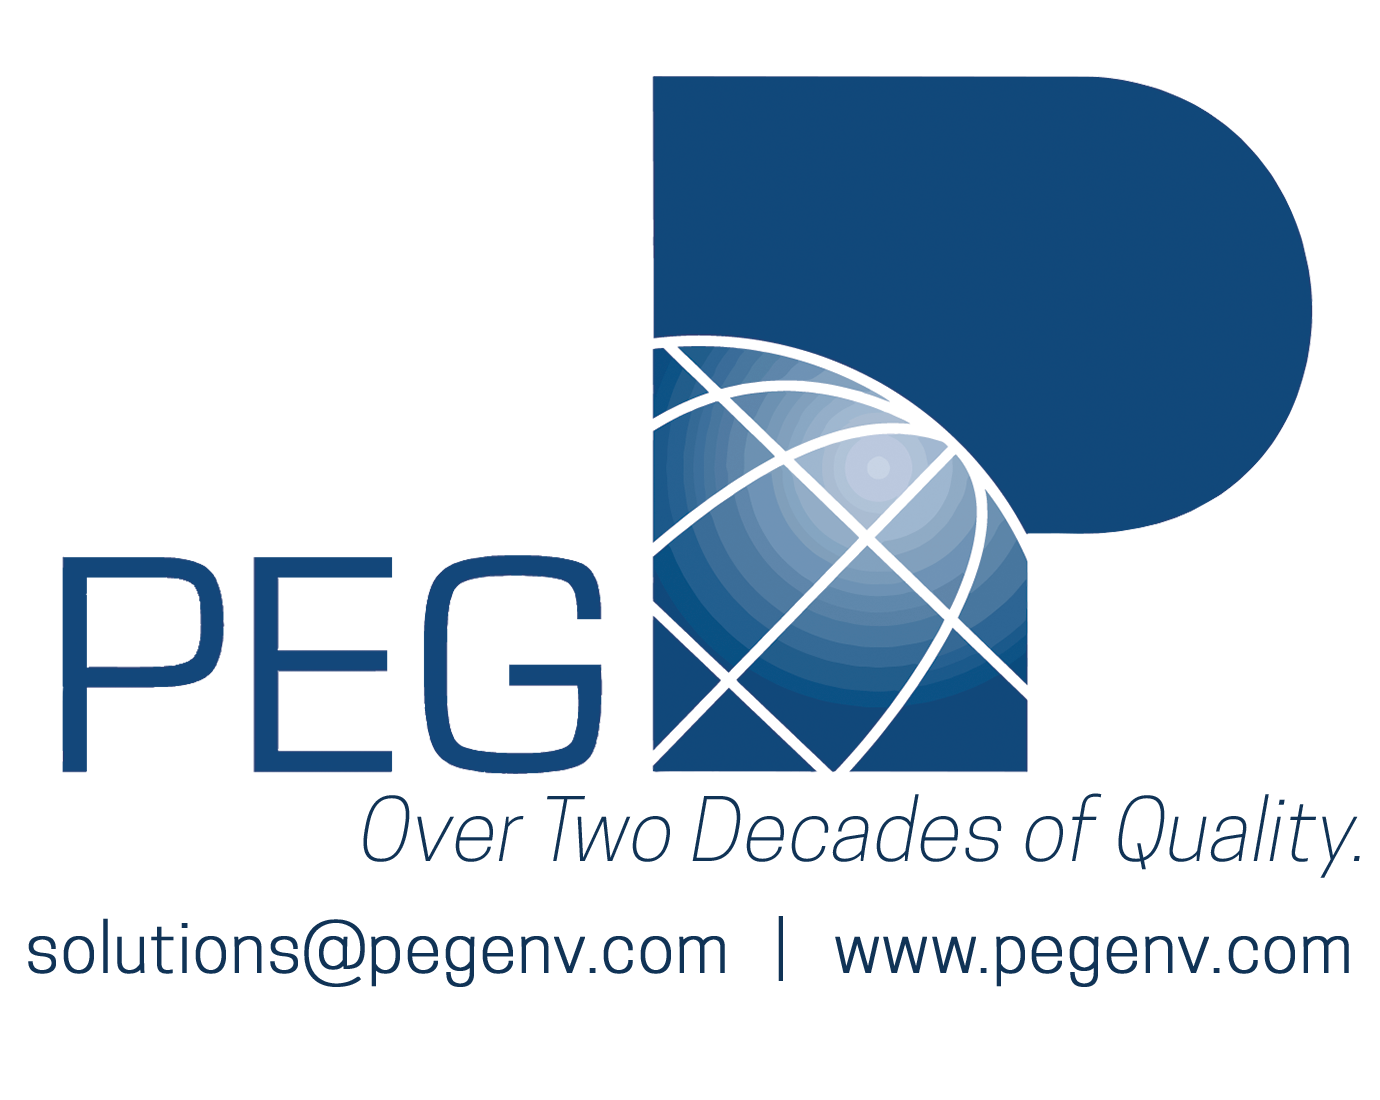 PEG LLC